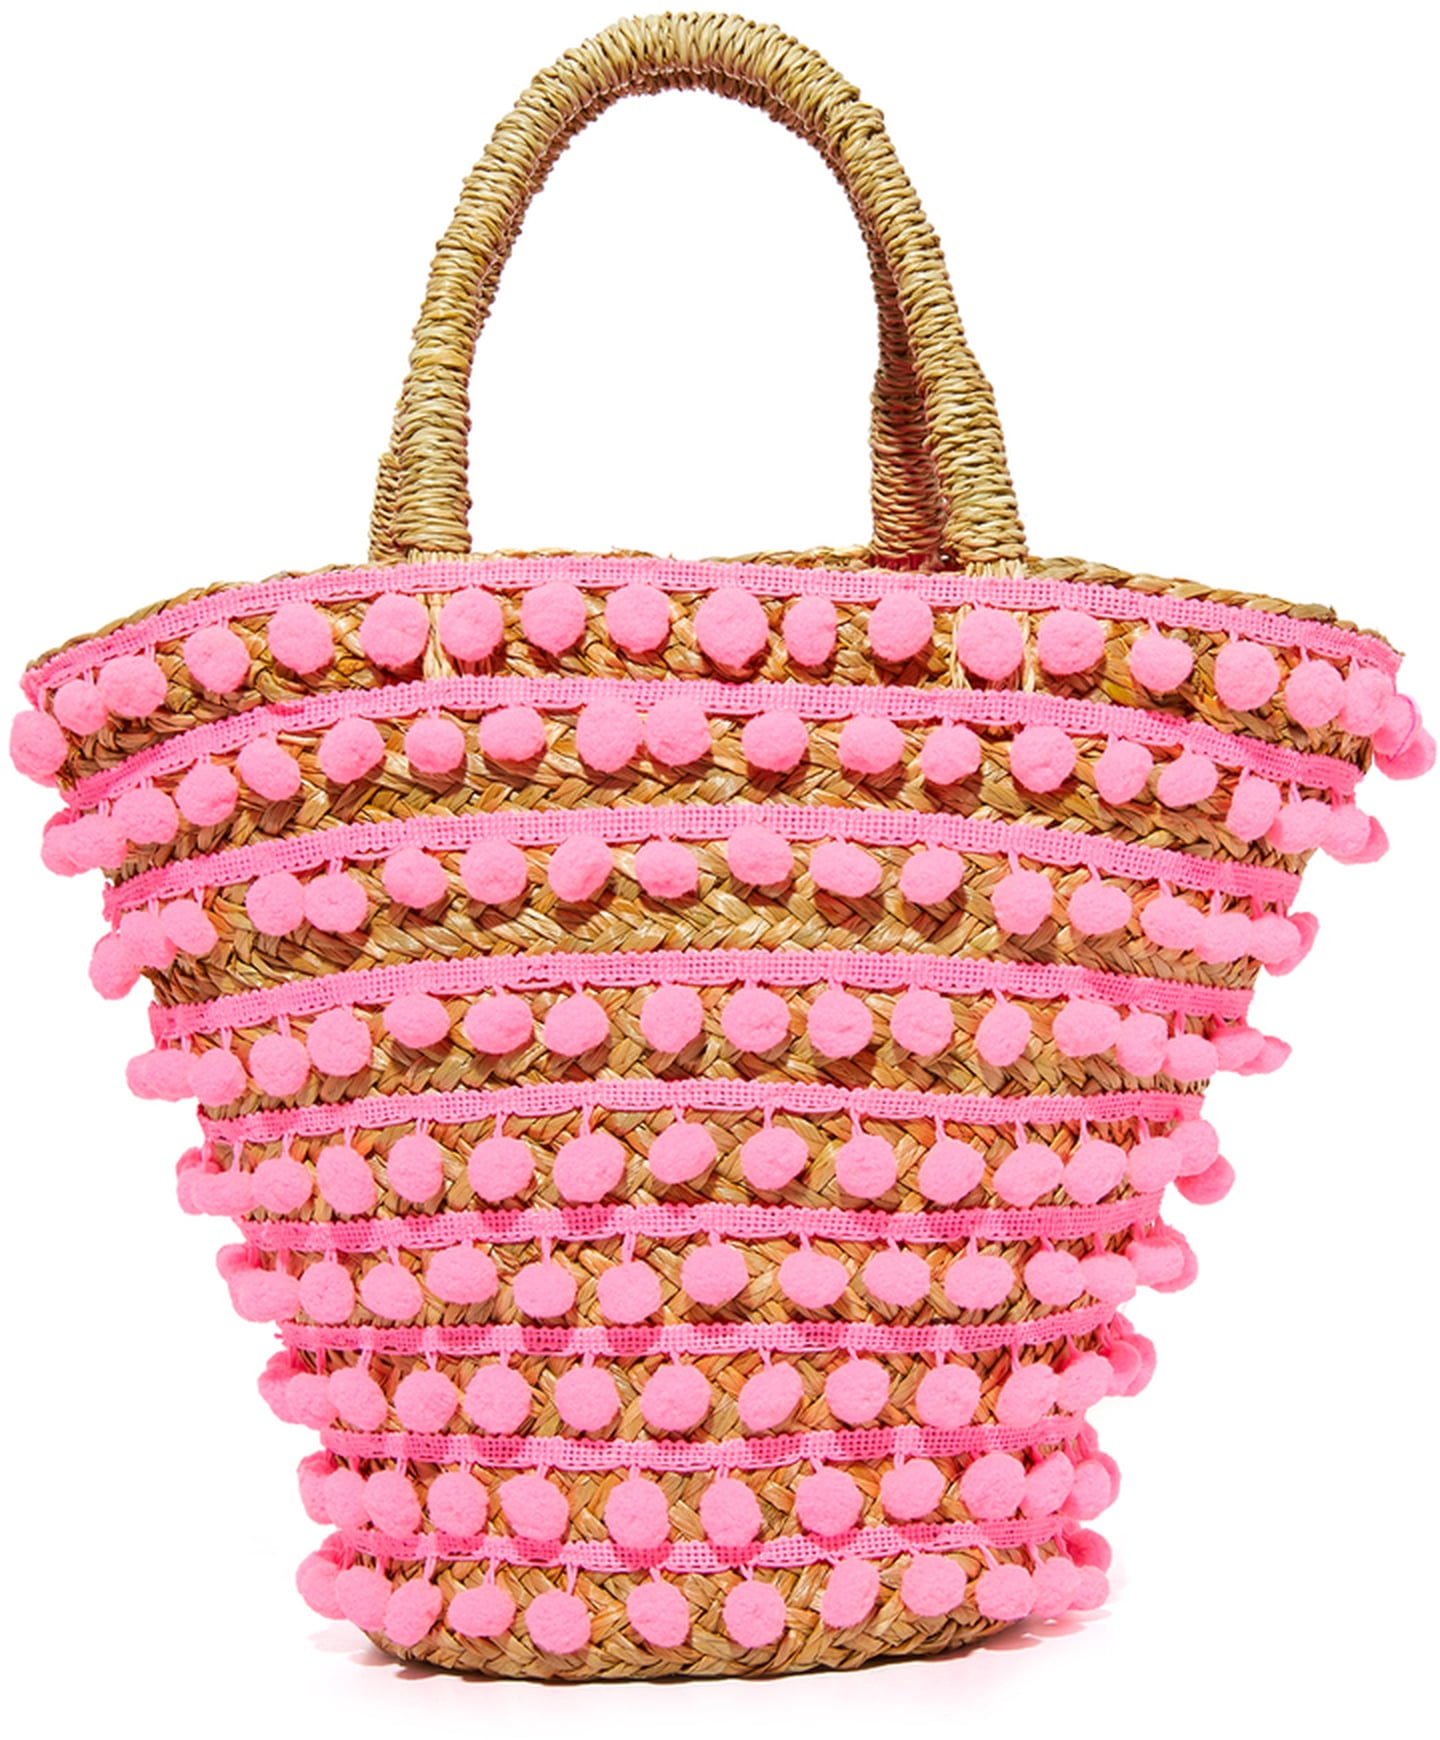 Millennial Pink Bags | POPSUGAR Fashion